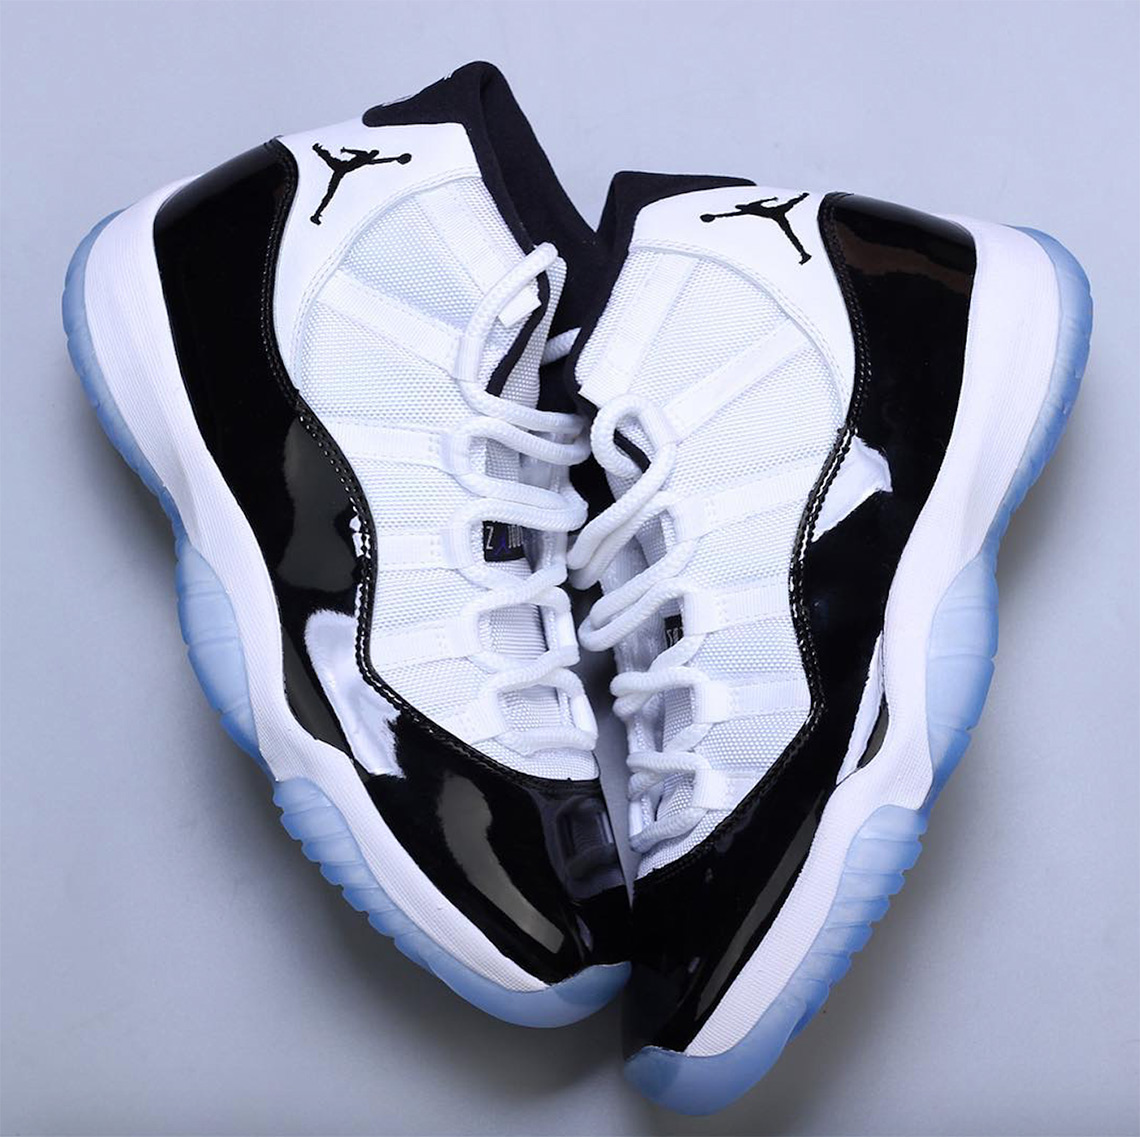 Jordan 11 Concord Shoes White Black 2